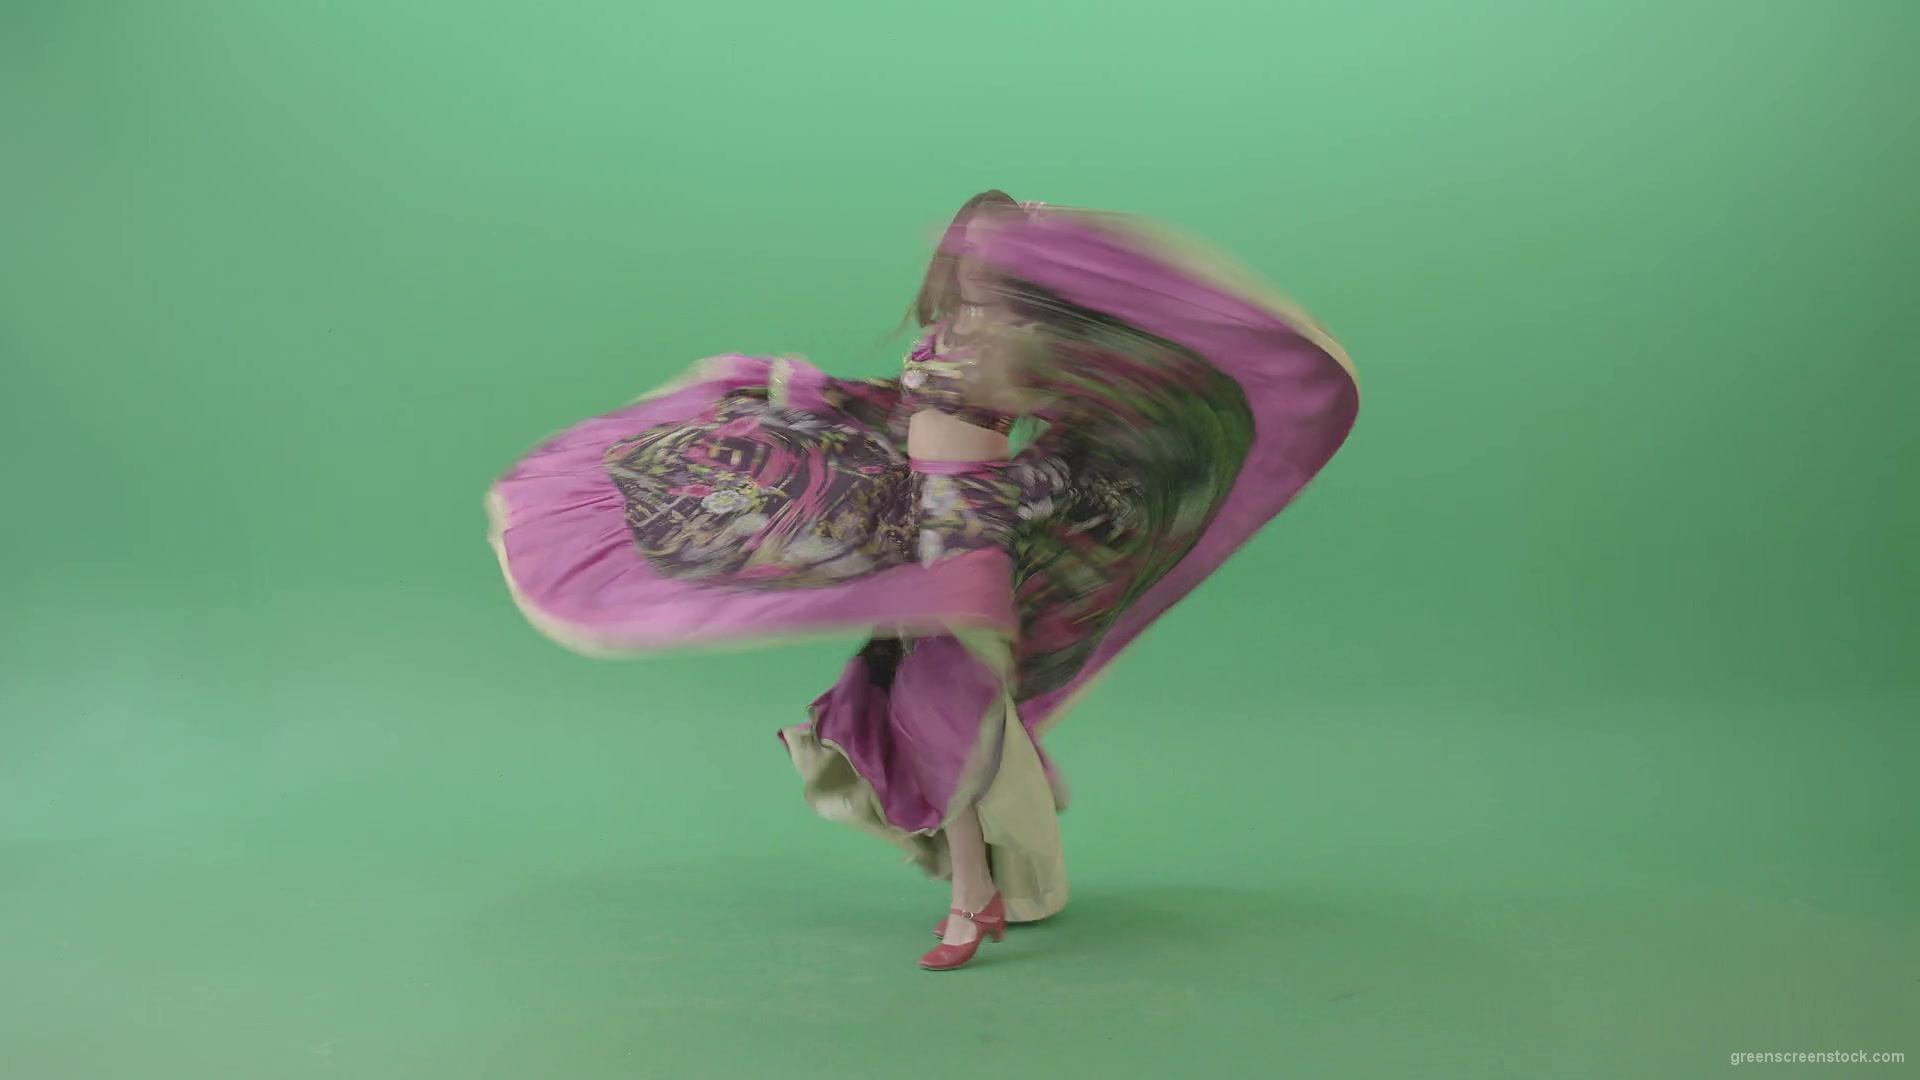 Lovely-Tzigane-romana-gypsy-women-waving-pink-dress-dancing-folk-isolated-in-green-screen-studio-4K-Green-Screen-Video-Footage-1920_006 Green Screen Stock